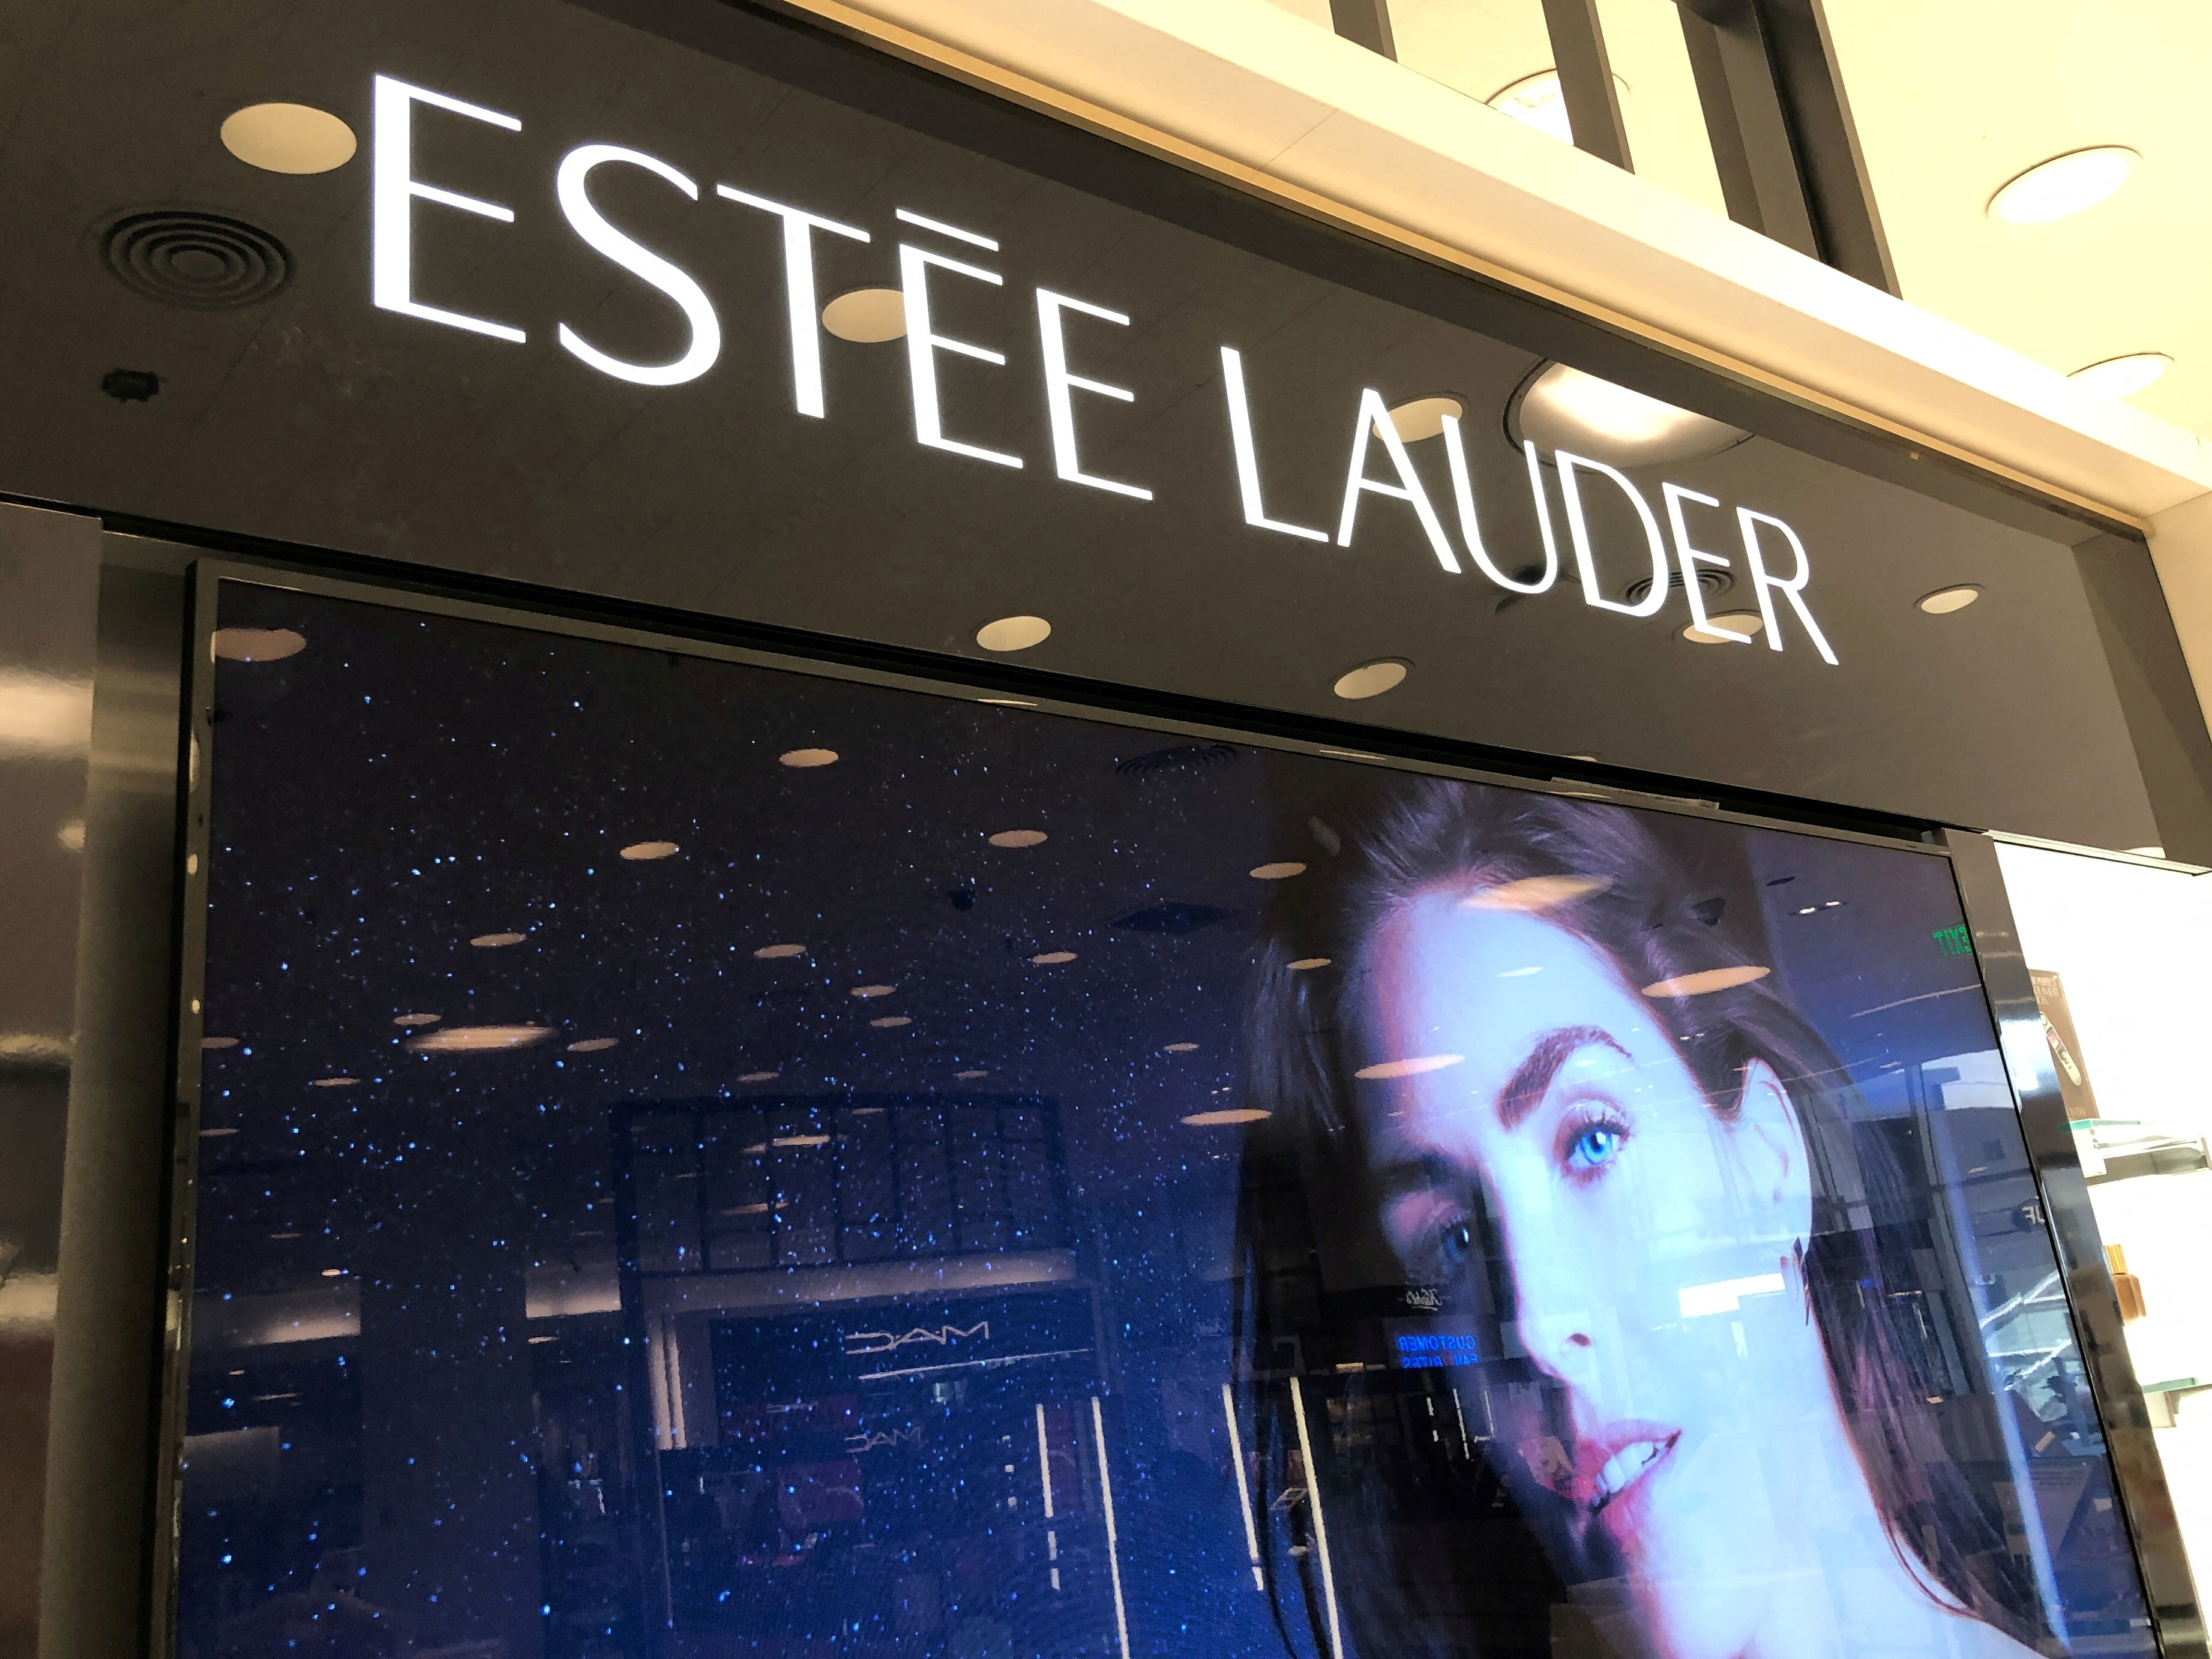 An Estee Lauder cosmetics counter is seen in Los Angeles